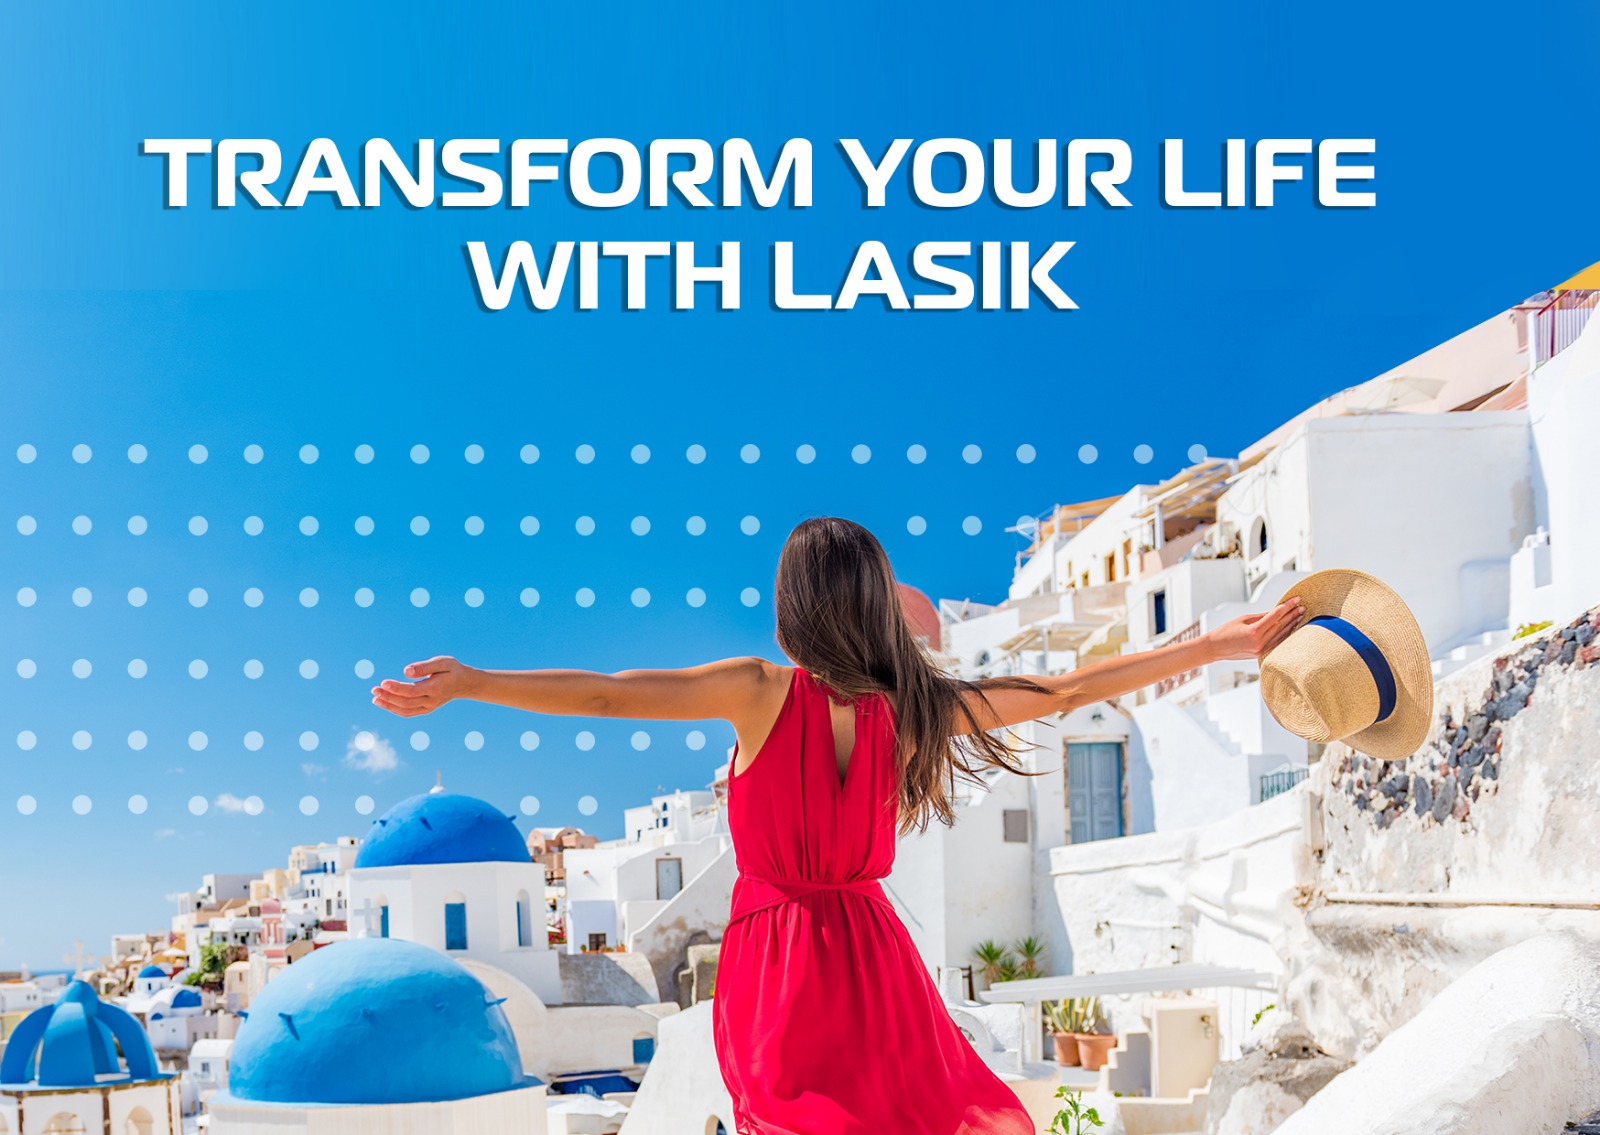 Benefits of Lasik Surgery